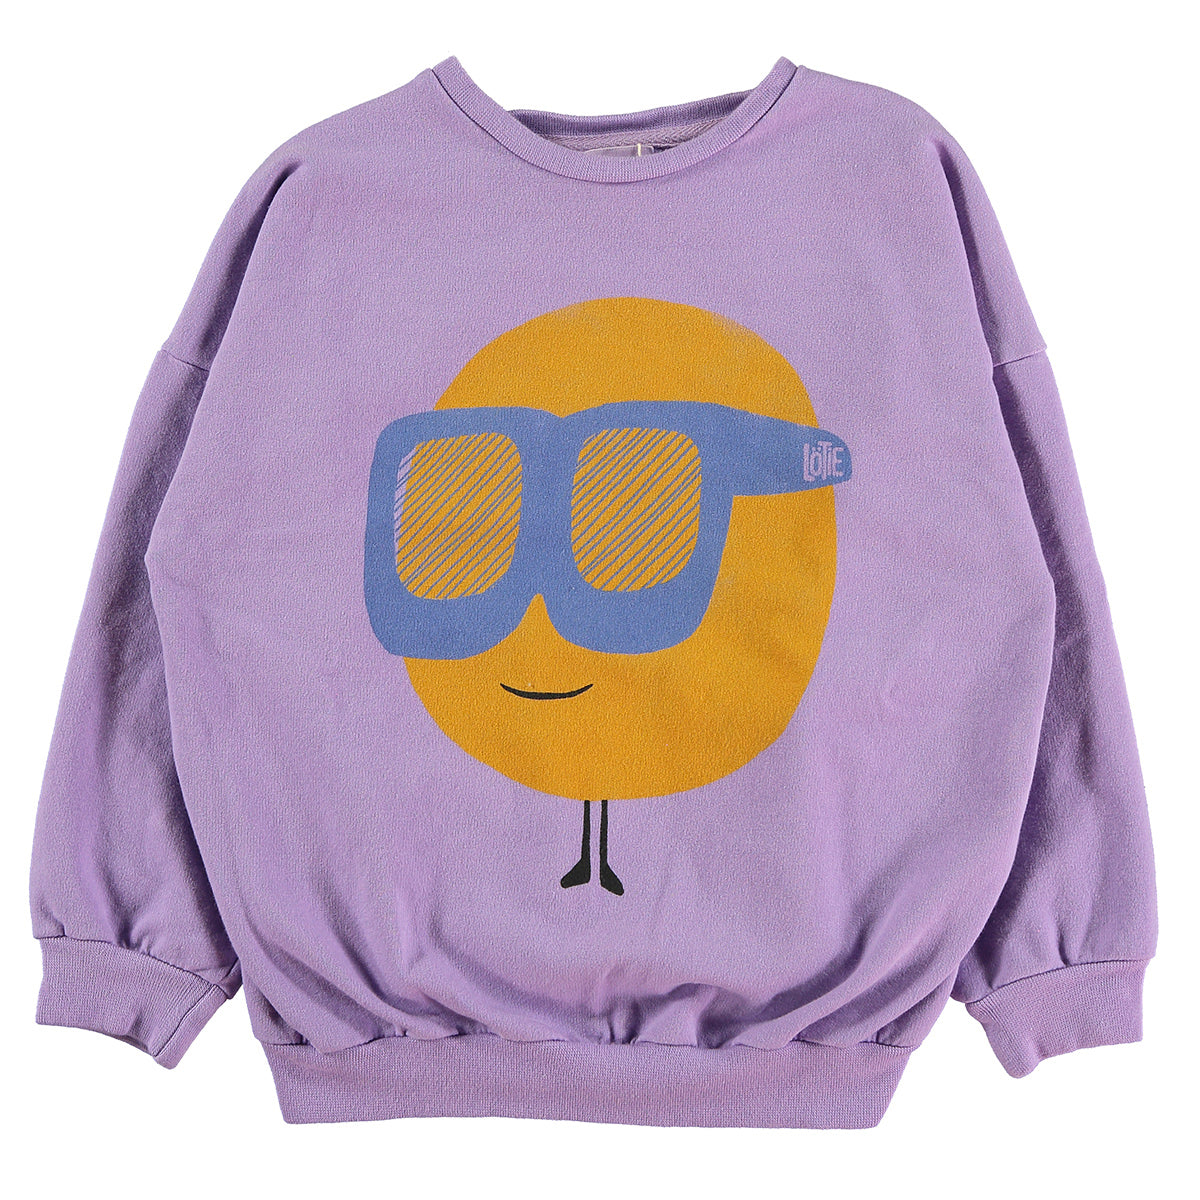 Lotie Kids - sweatshirt - sunglasses - mauve